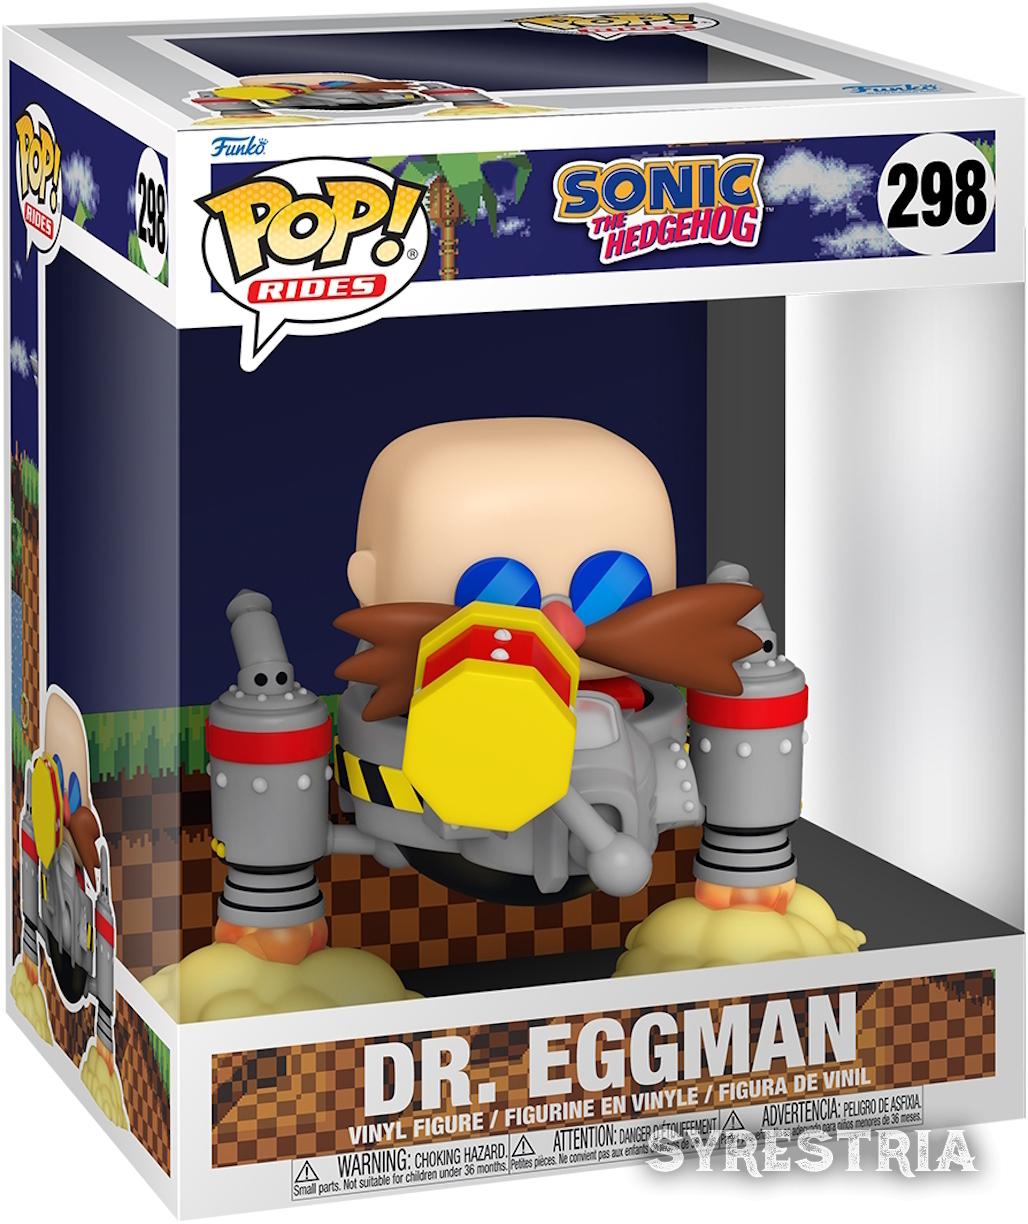 Sonic The Hedgehog - Dr. Eggman 298  - Funko Pop! Vinyl Figur